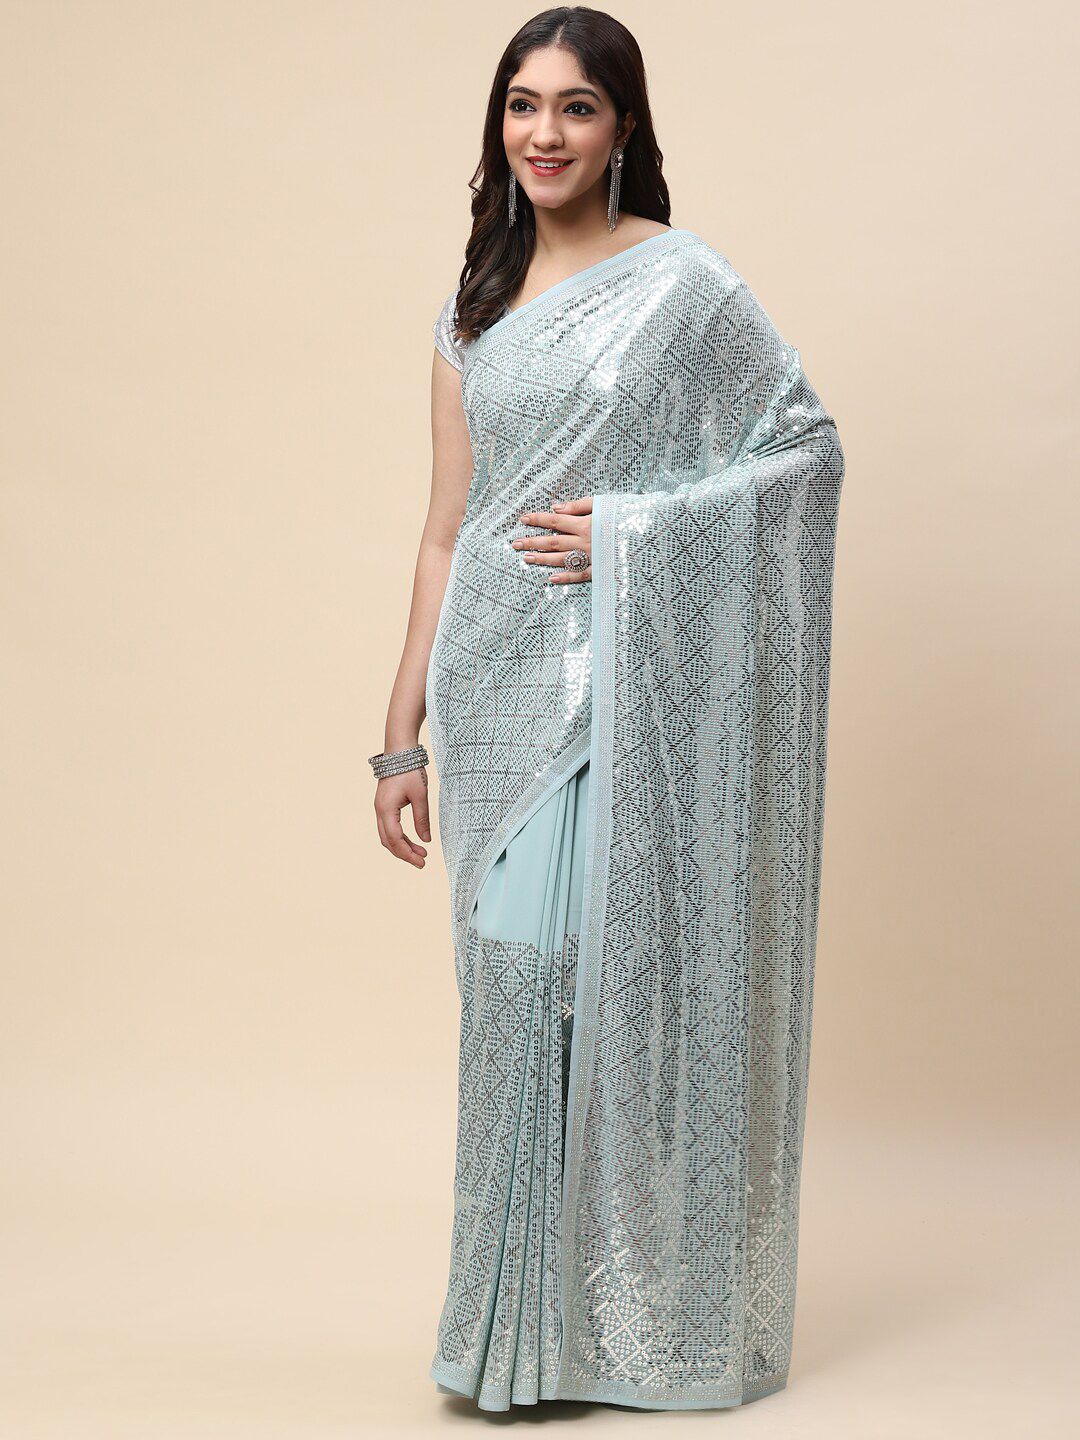 Meena Bazaar Sea Green & Silver-Toned Embellished Sequinned Saree Price in India